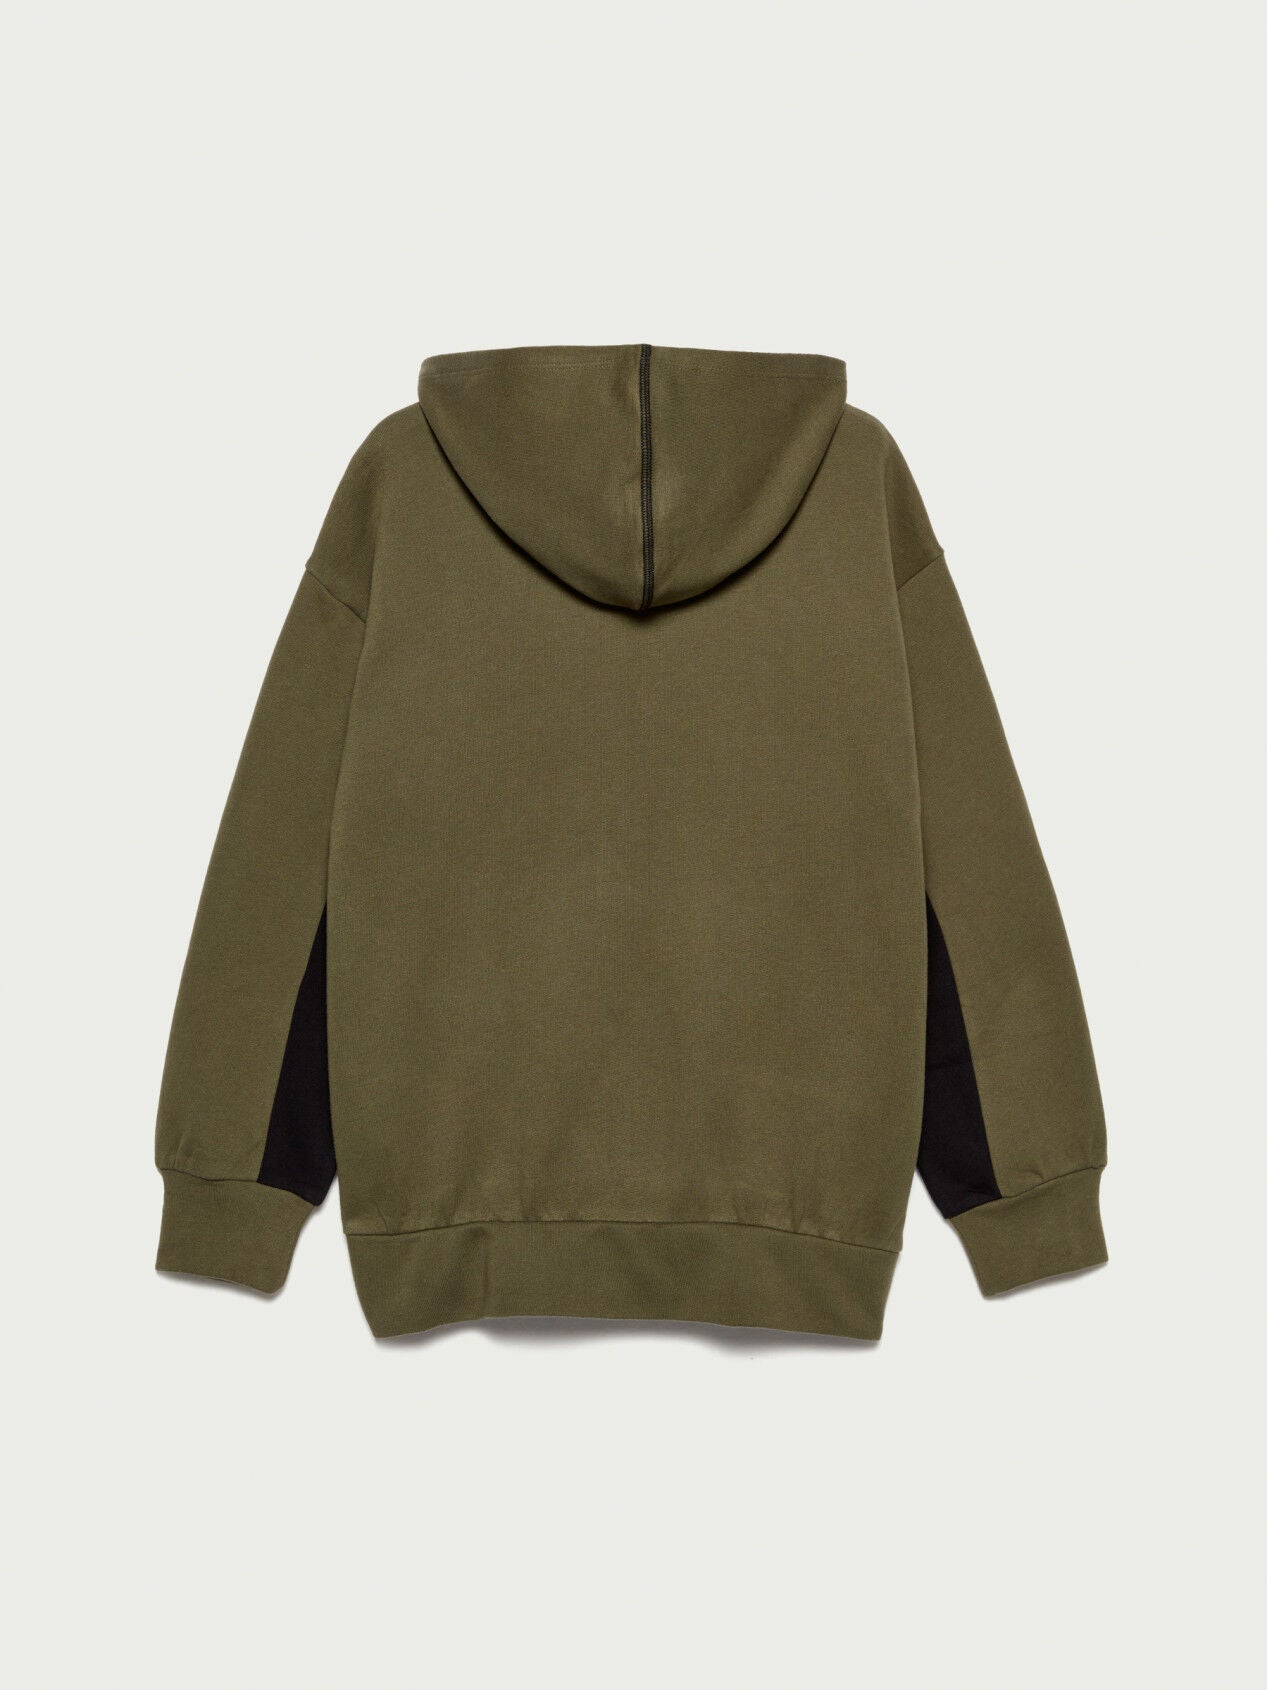 Green Jacket W/Hood L/S